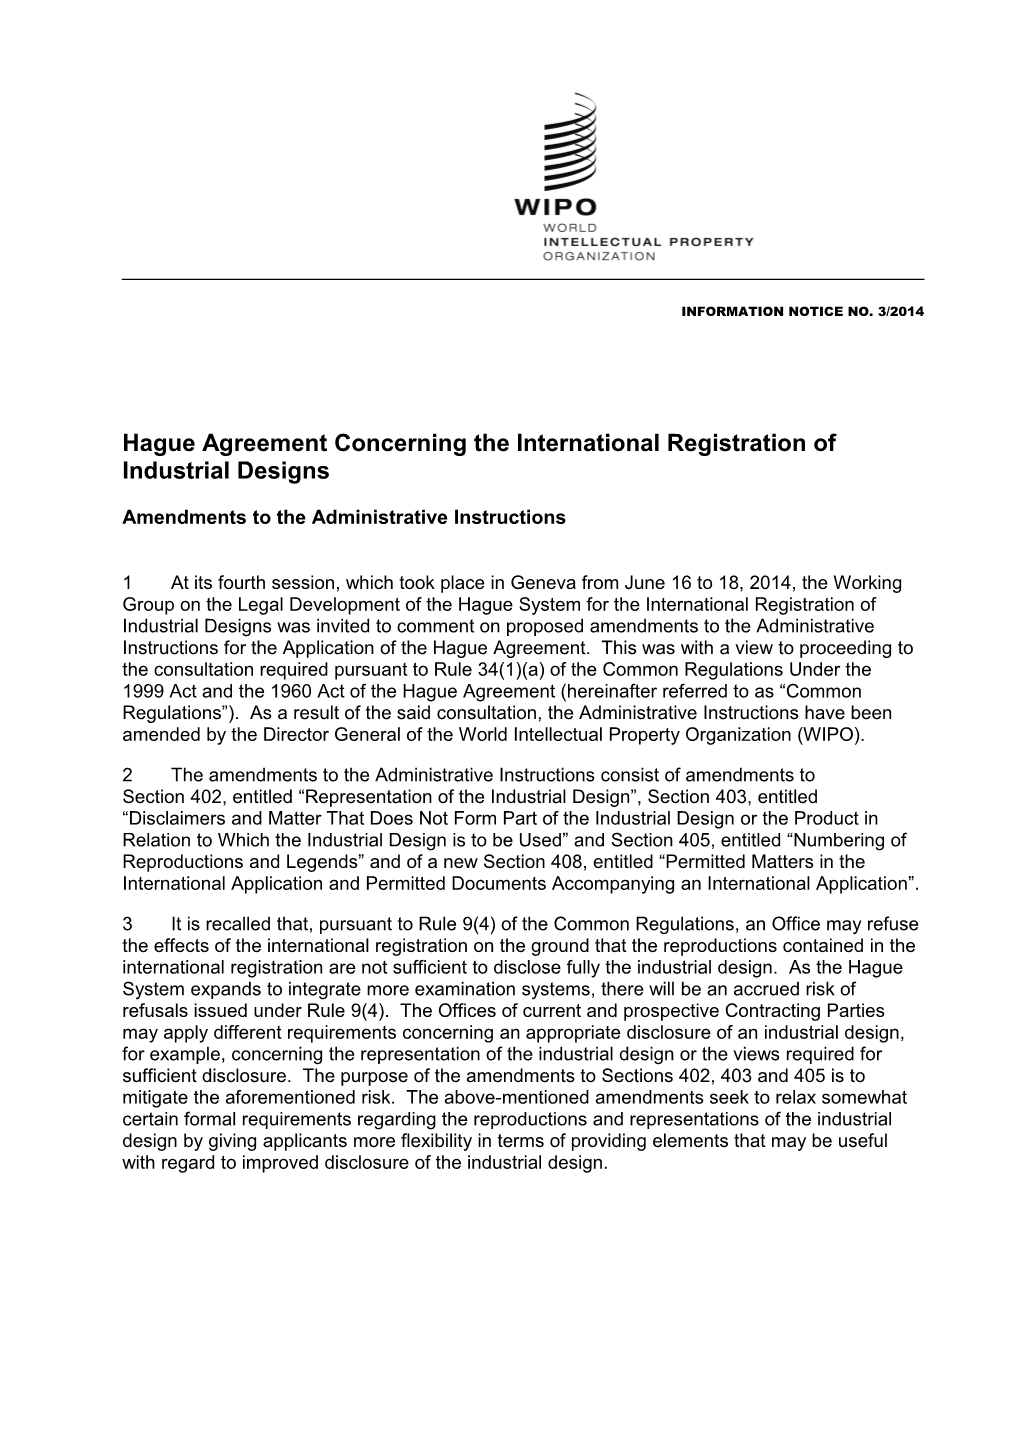 Hagueagreement Concerning the Internationalregistration of Industrial Designs